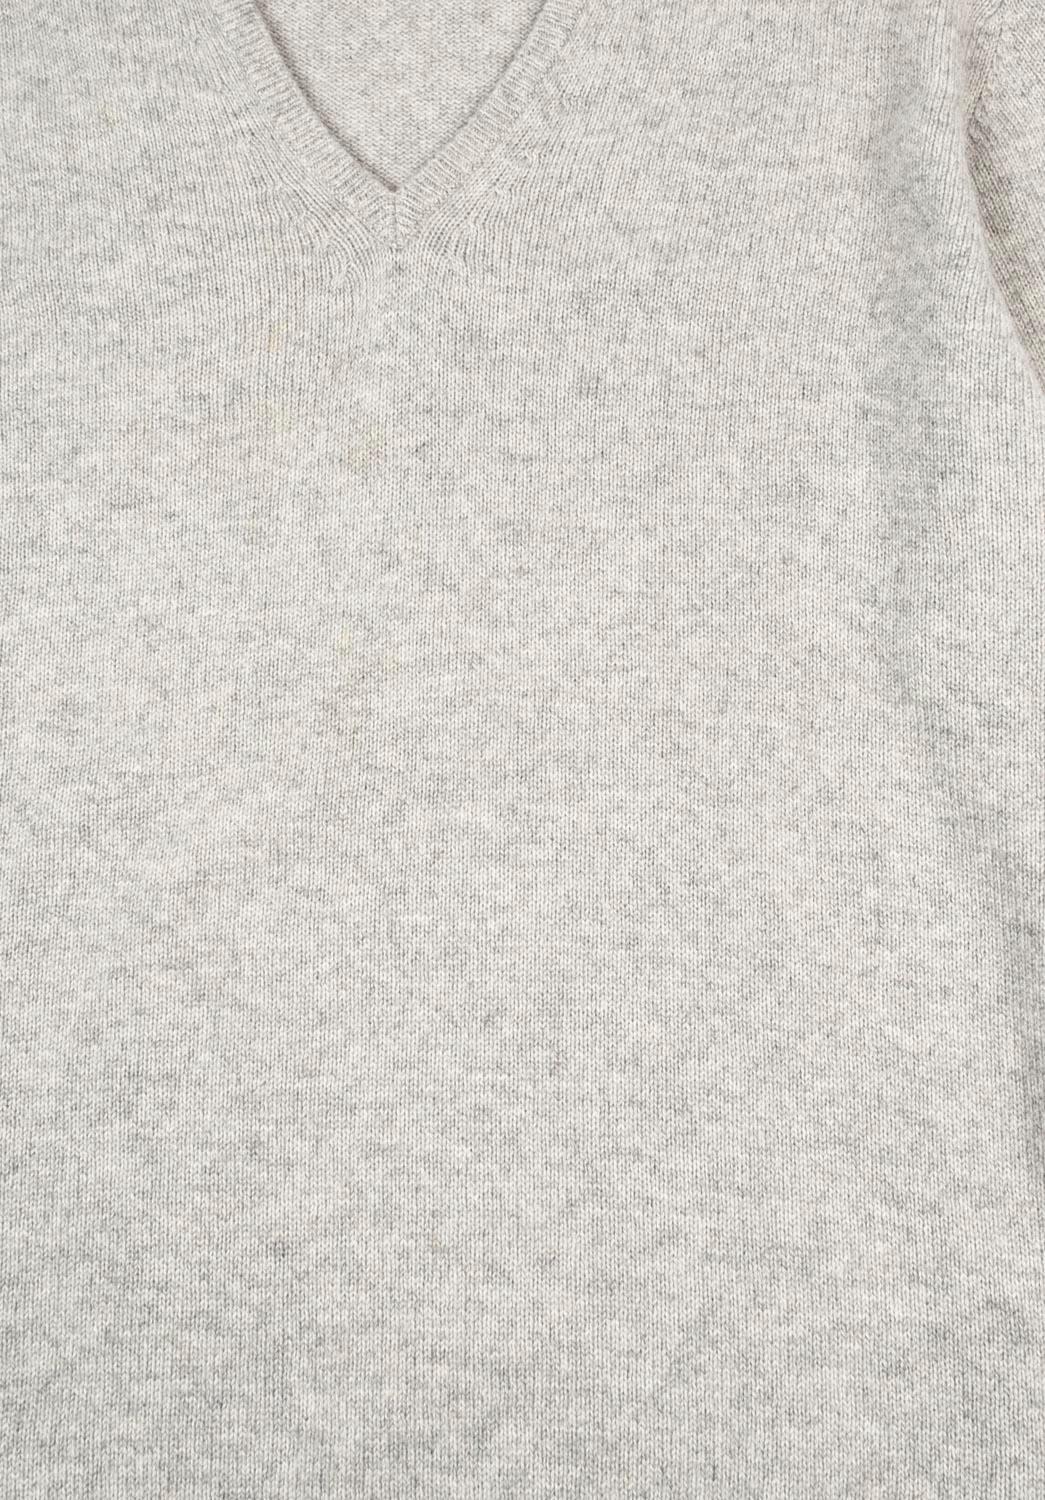 Prada Men Sweater Cashmere V Neck Size ITA52 (L), S687 In Excellent Condition For Sale In Kaunas, LT